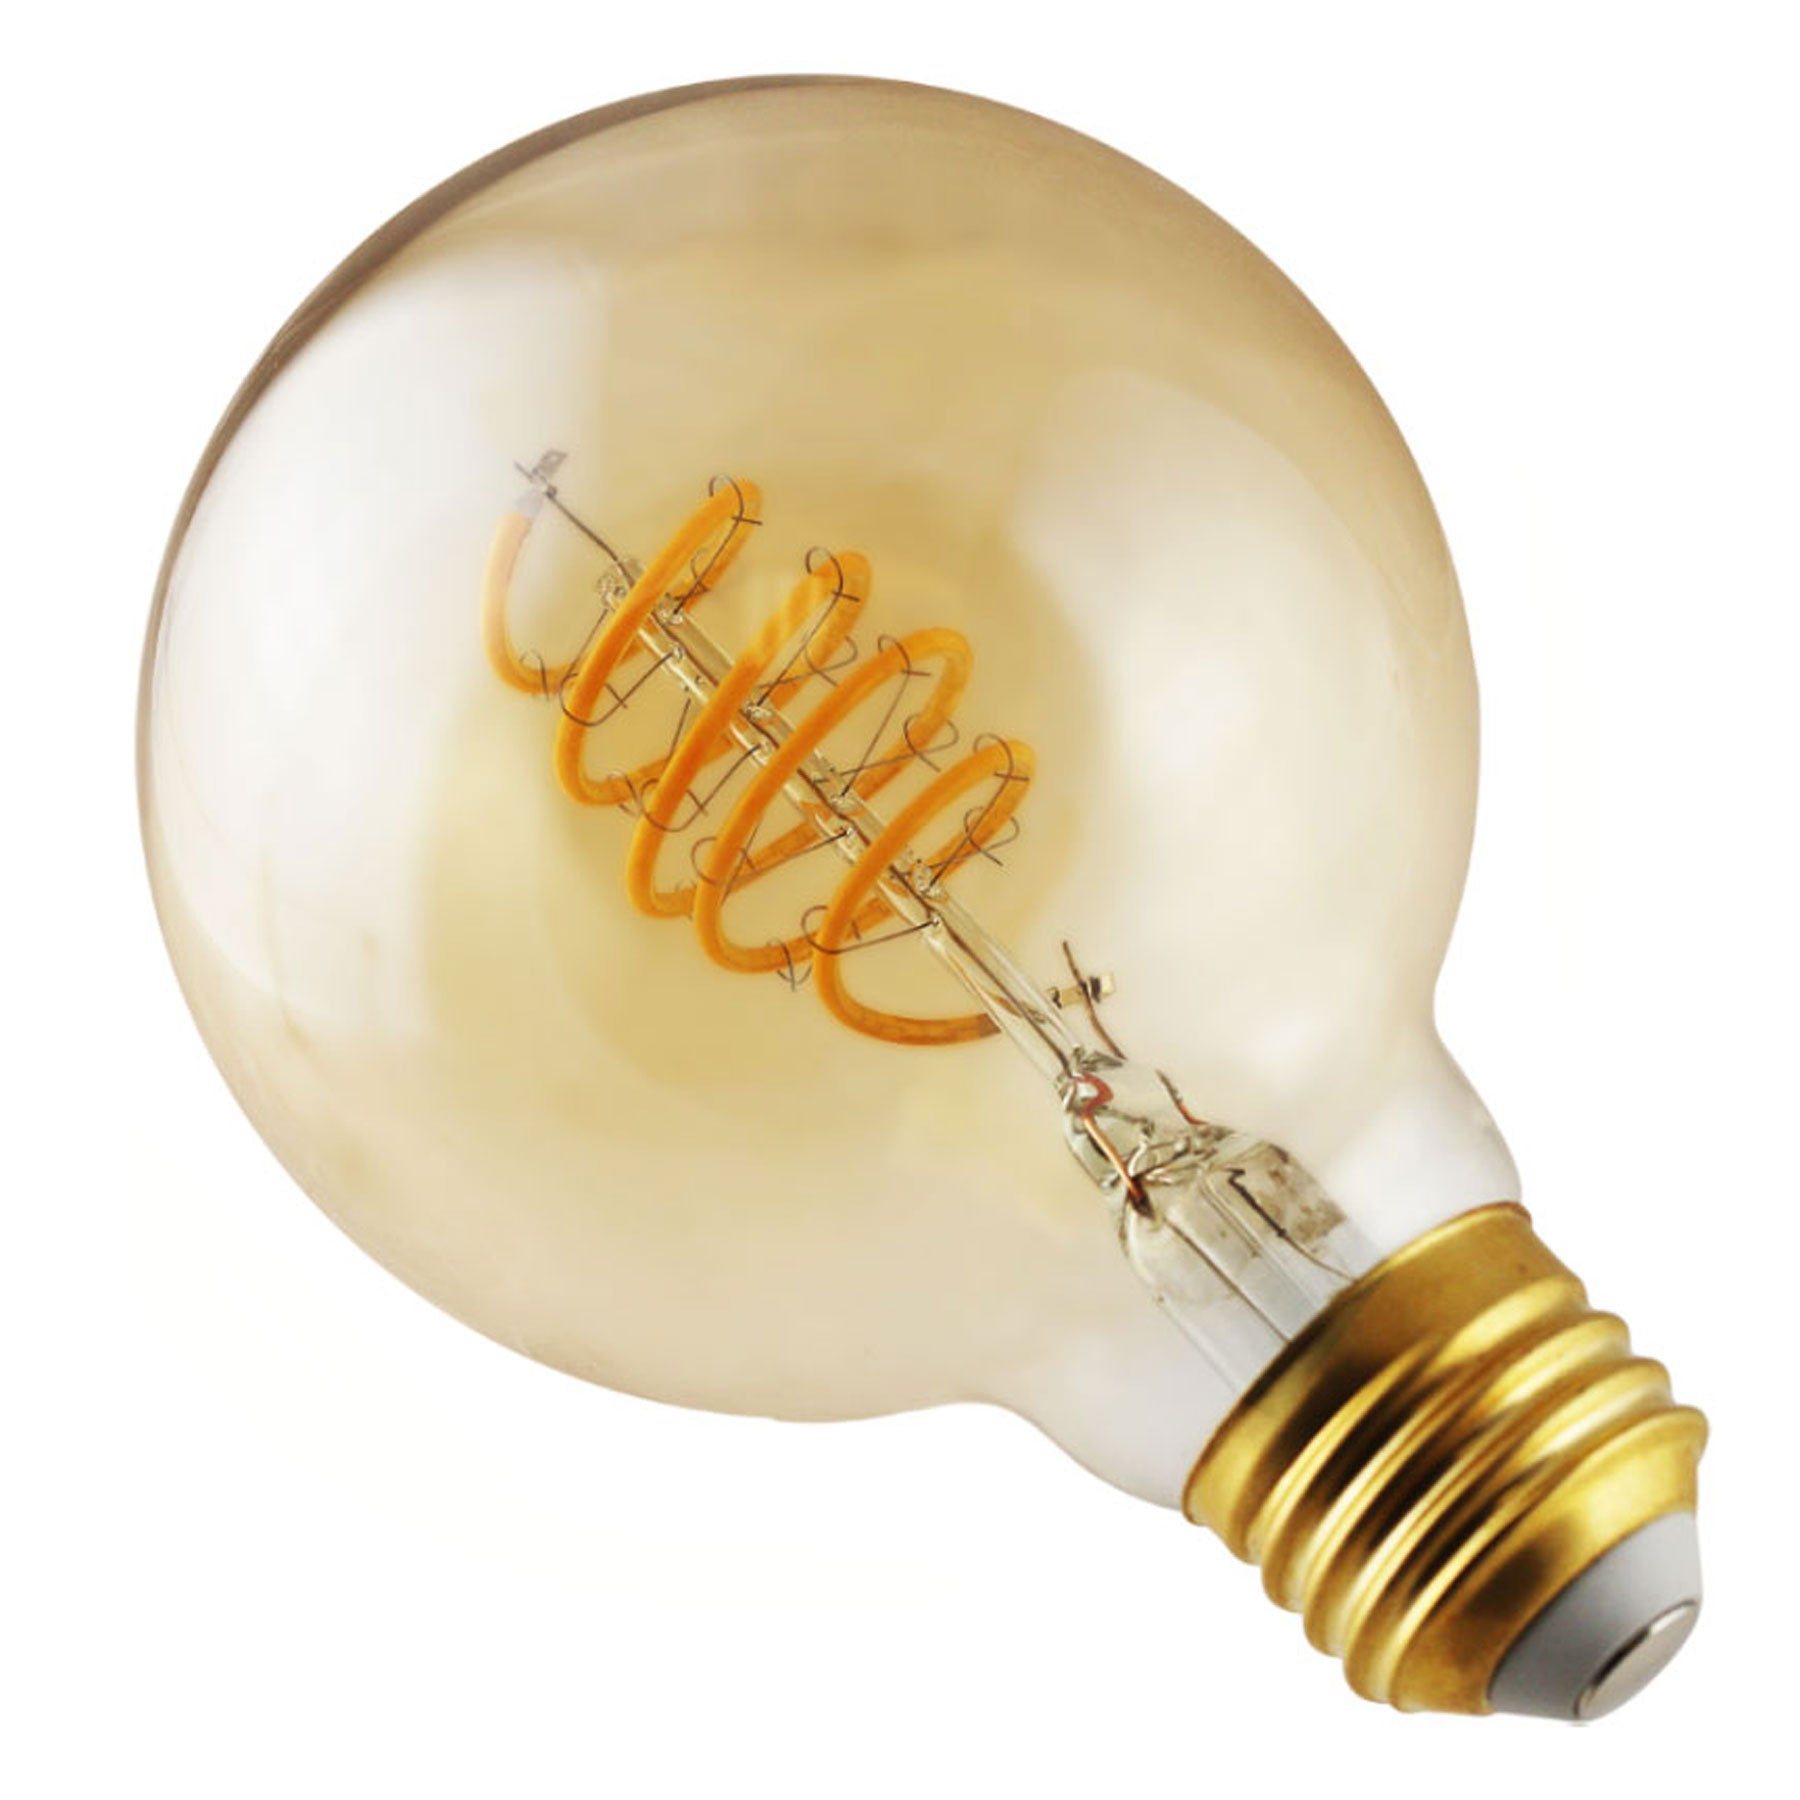 Globe G25 Globe E26 Decorative Swizzle Filament Amber Light Bulb